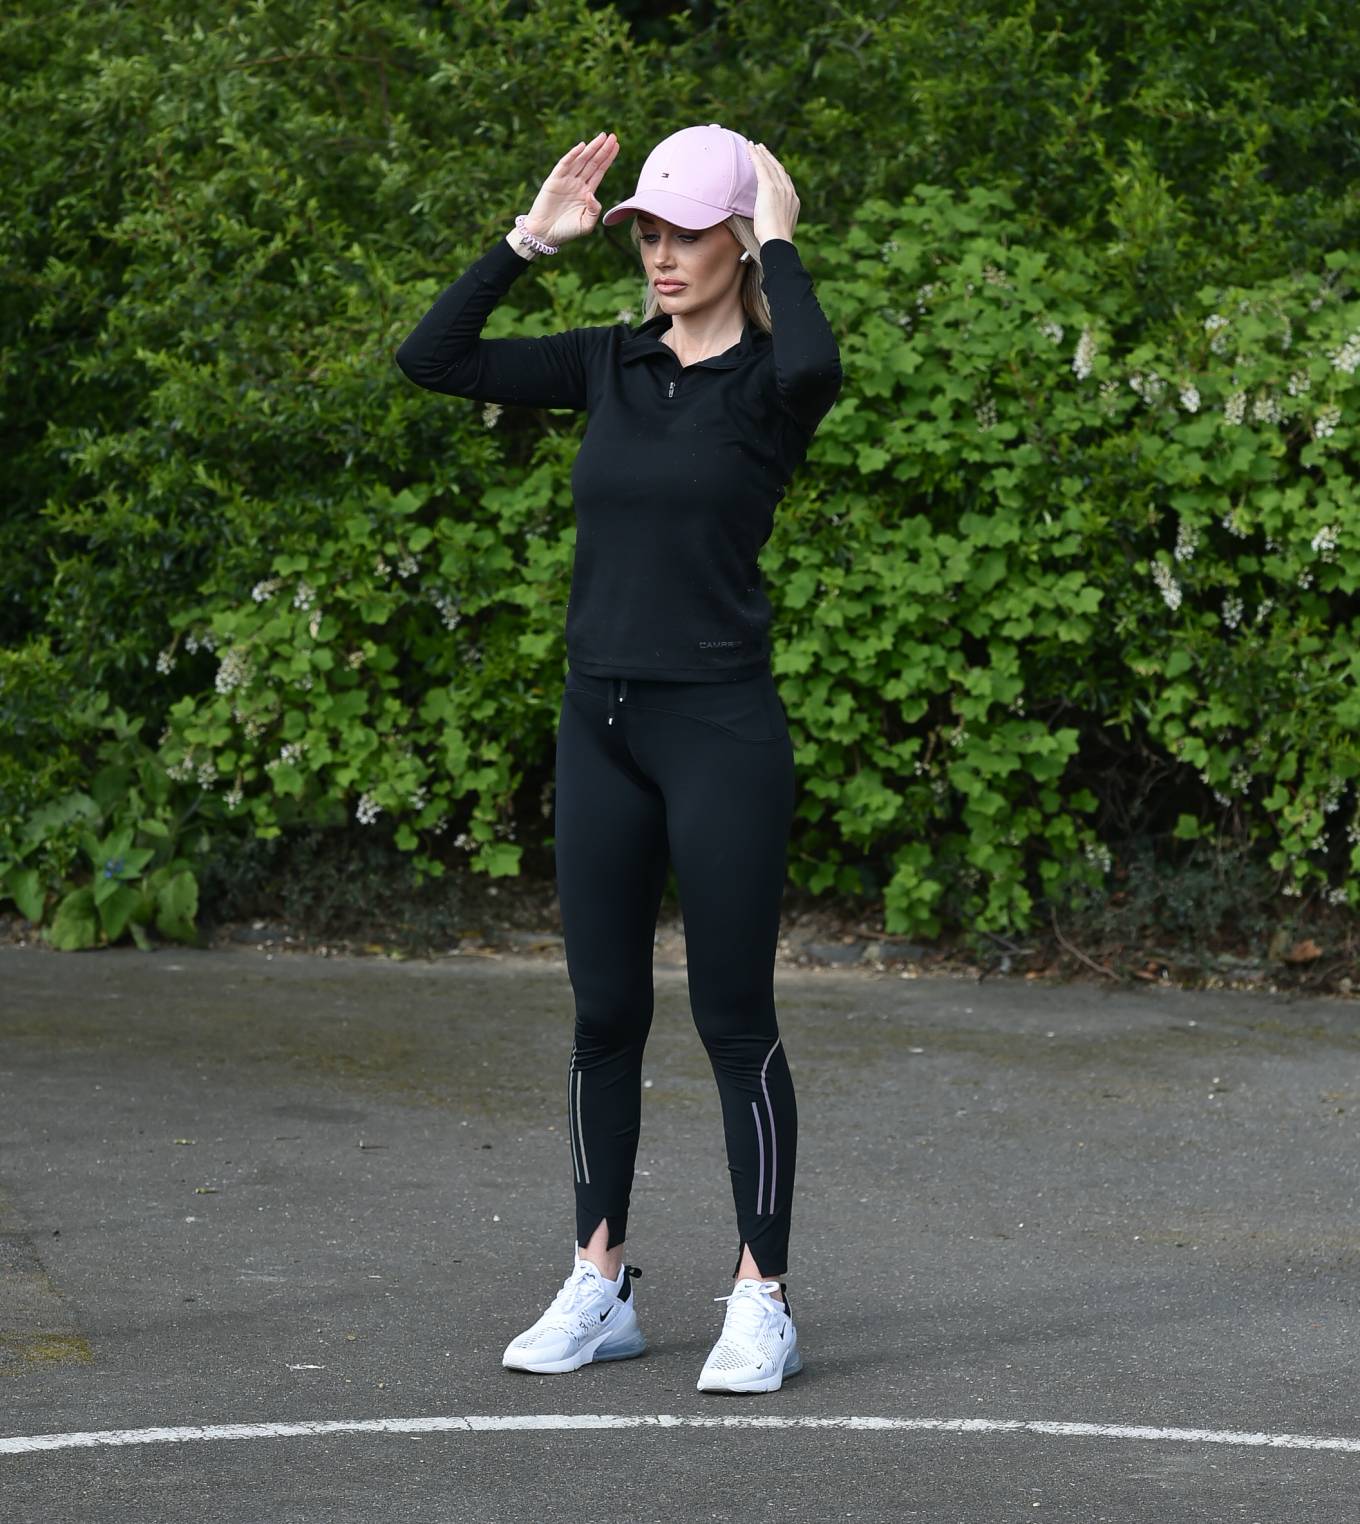 Laura Anderson â€“ Jogging during coronavirus lockdown